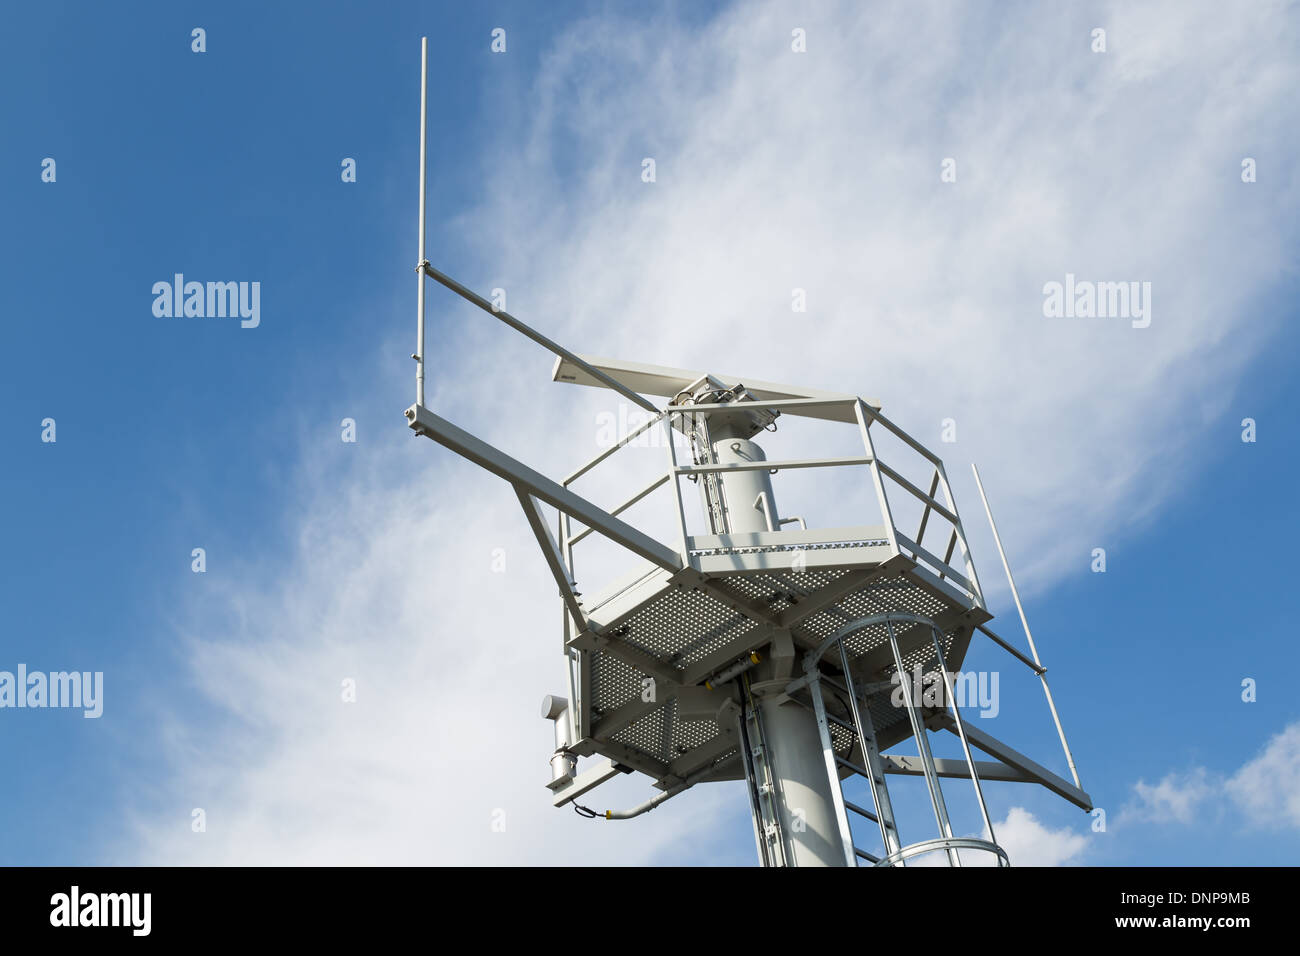 Iron tower with radar and radio communication equipment Stock Photo